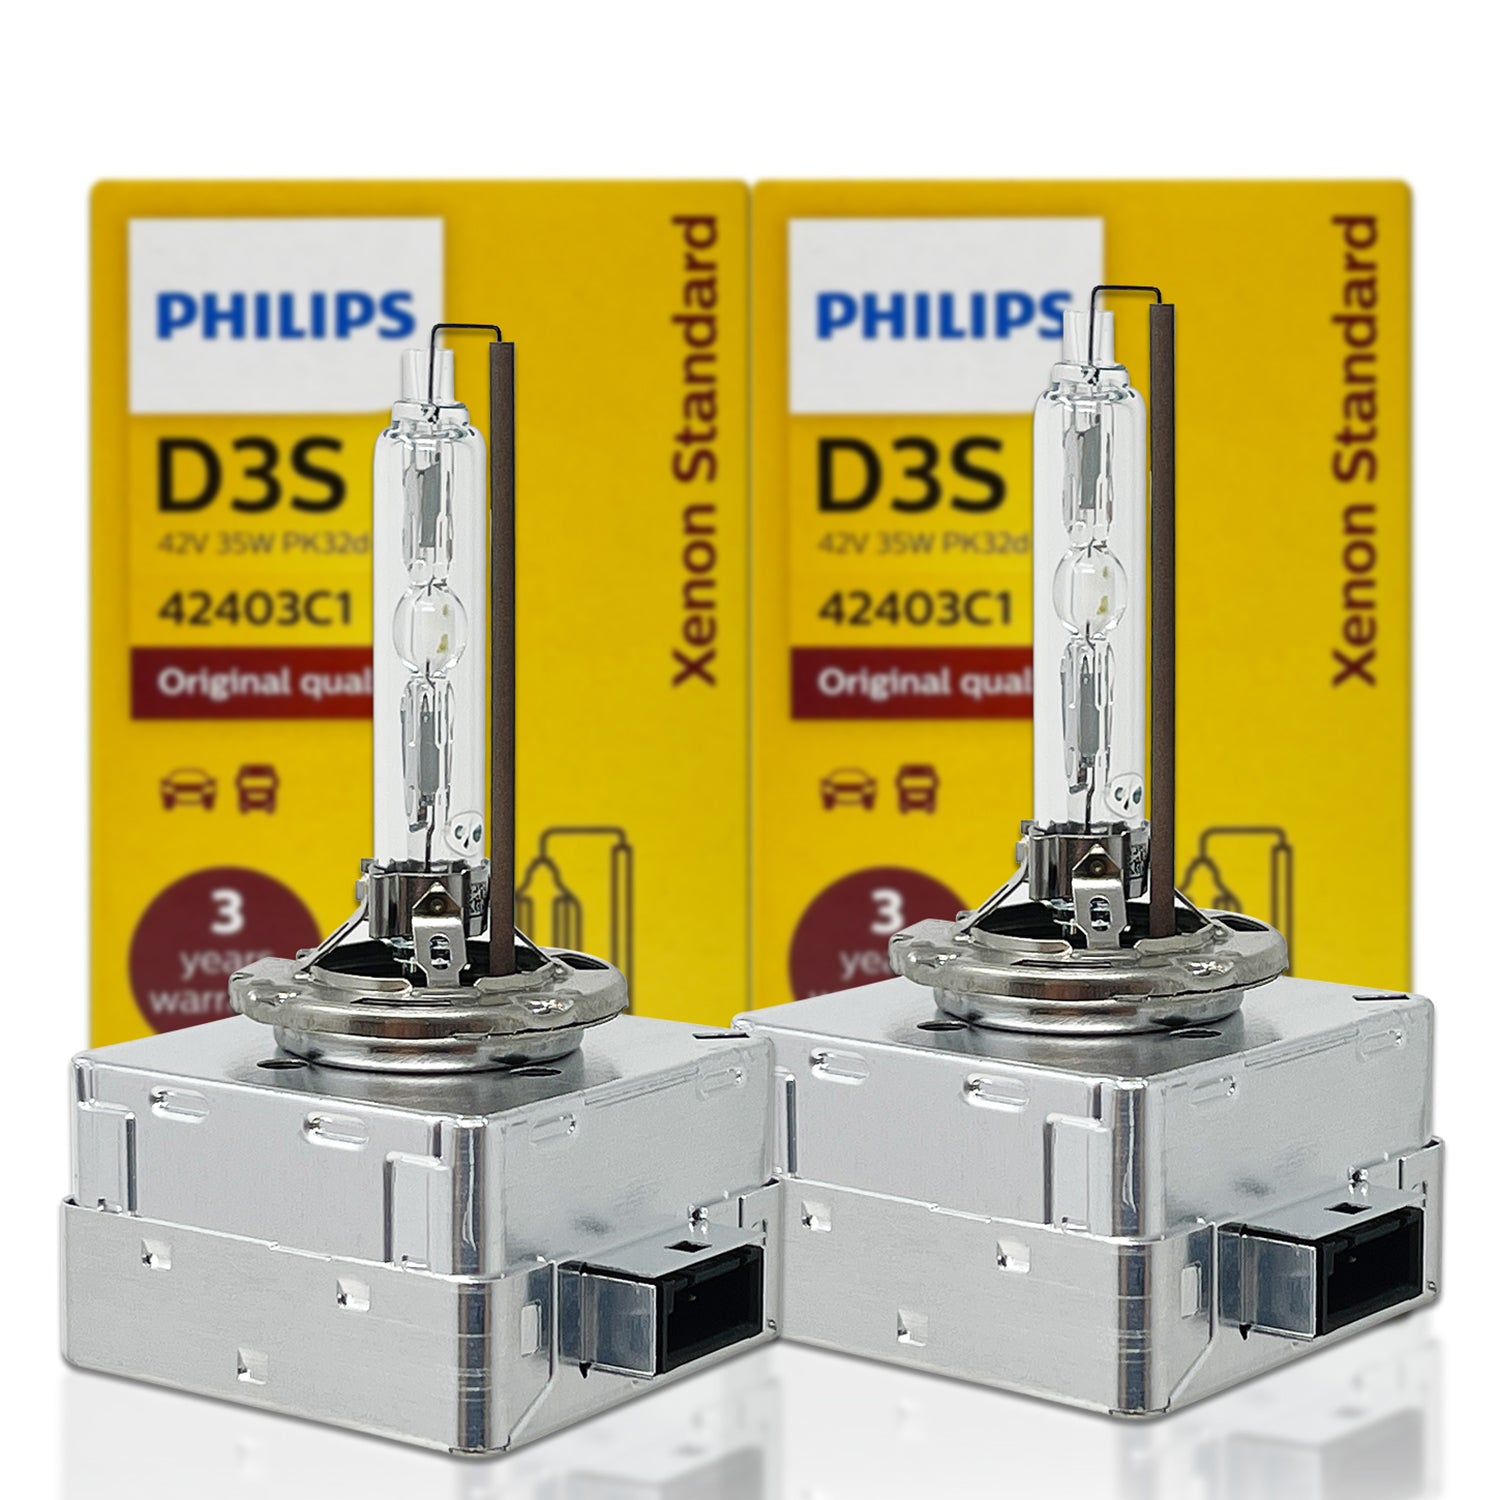 D3S Philips OEM HID 4300K Bulbs, 42403